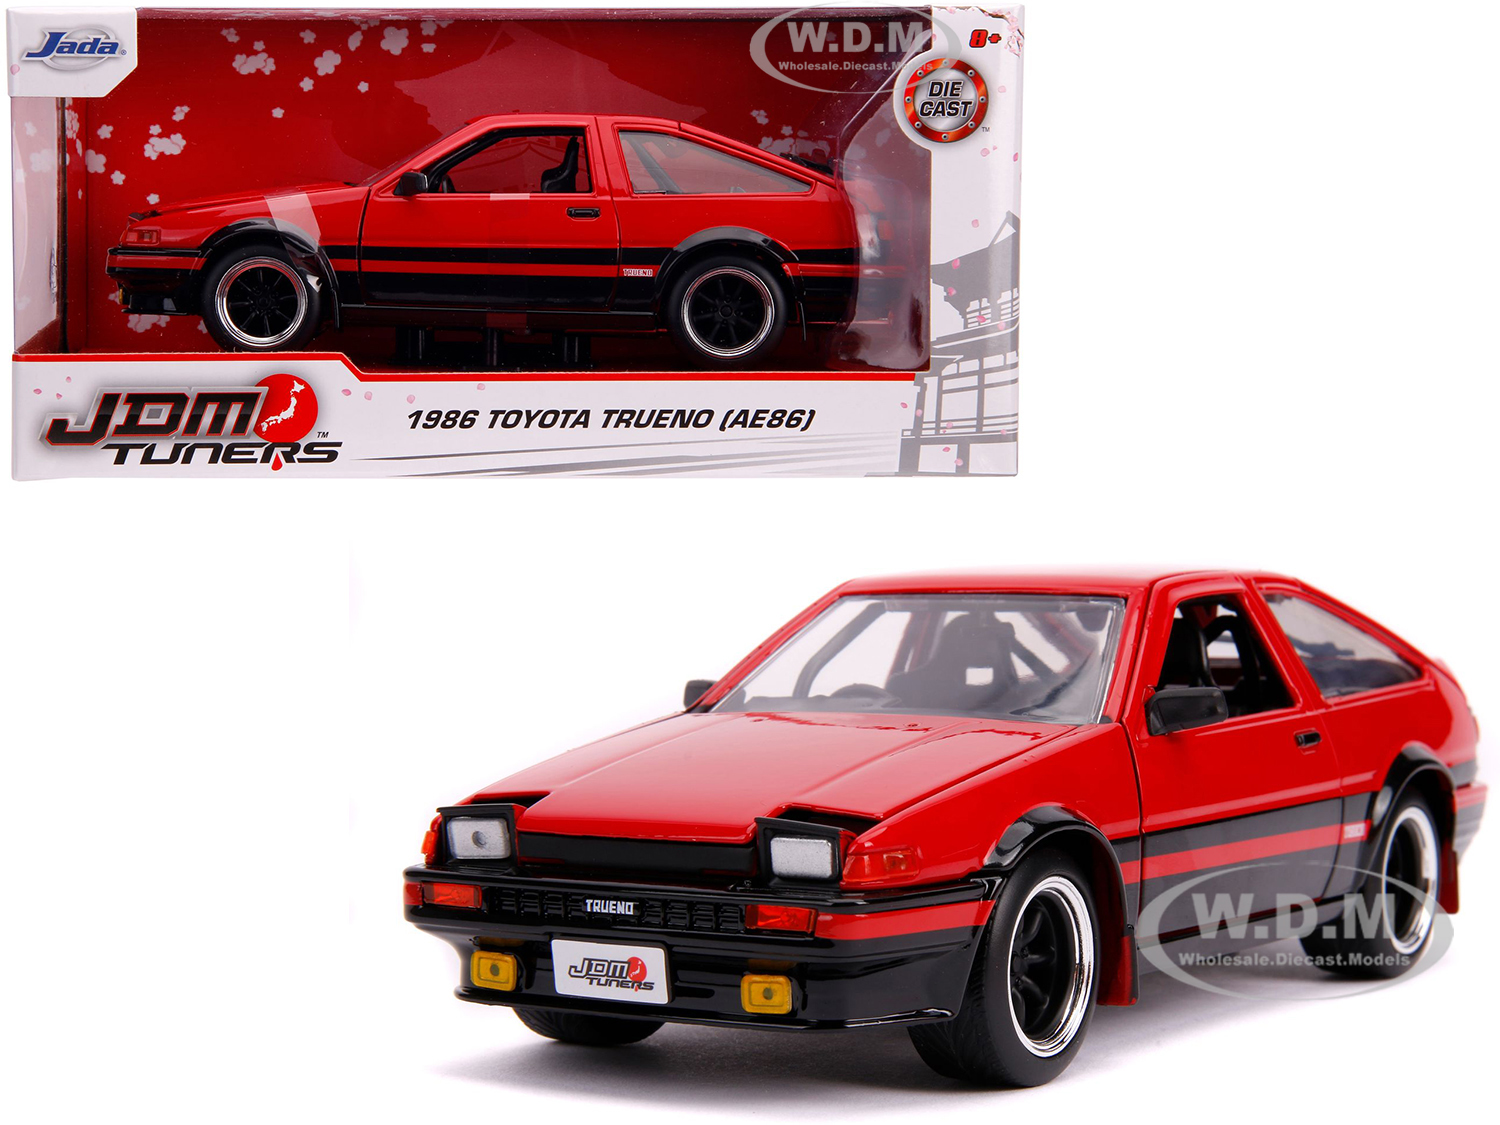 1986 Toyota Trueno (ae86) Rhd (right Hand Drive) Glossy Red And Black "jdm Tuners" 1/24 Diecast Model Car By Jada